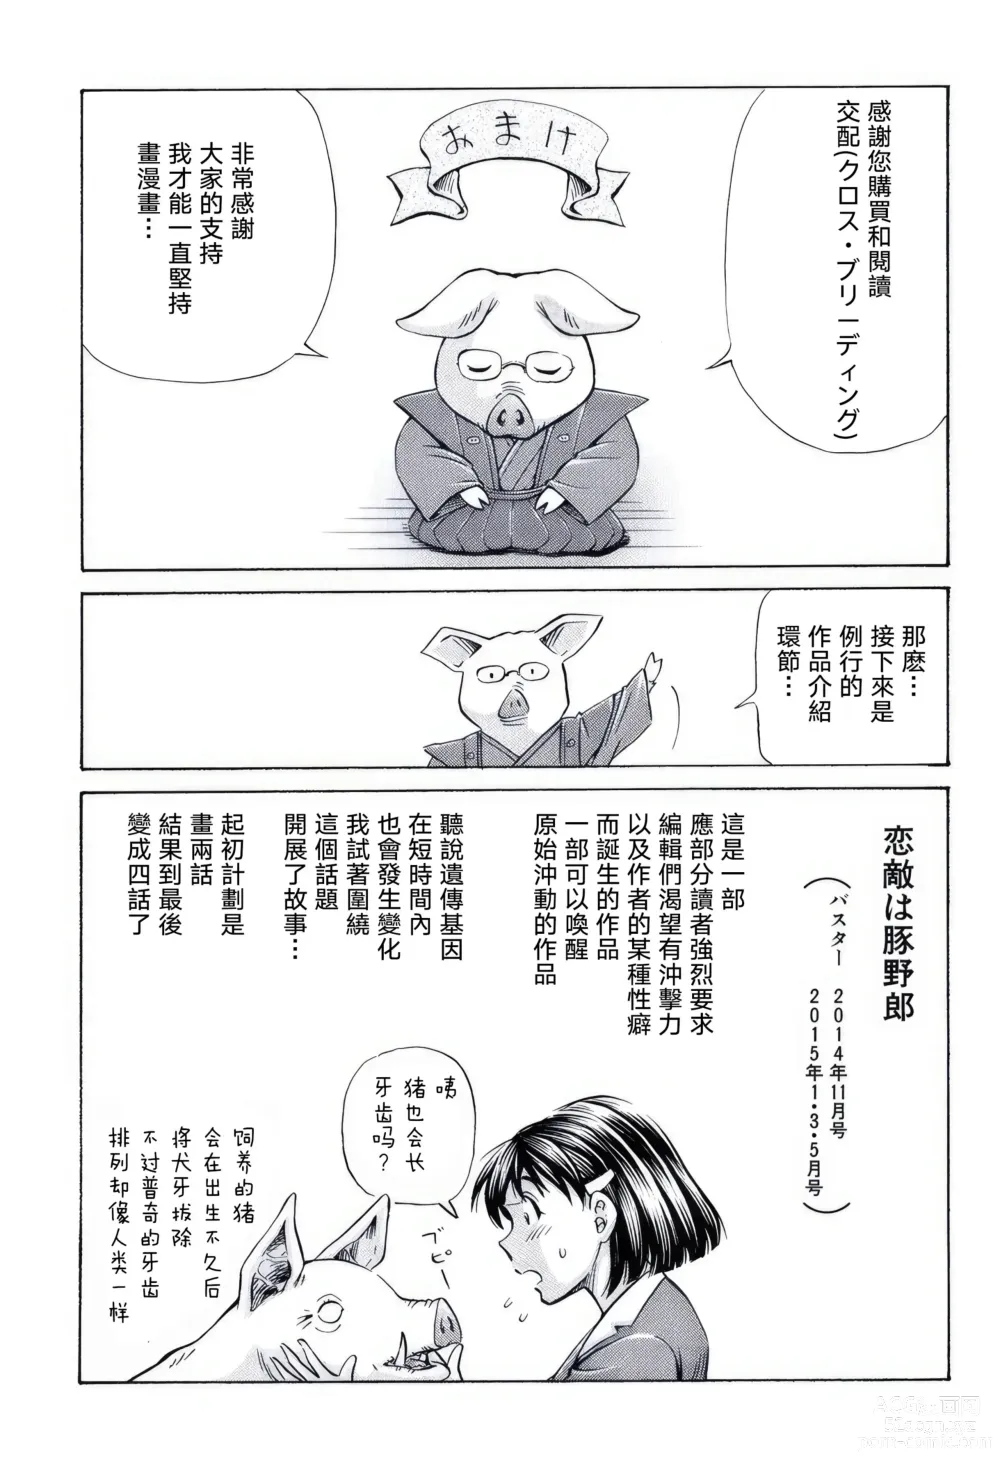 Page 187 of manga Cross-Breeding